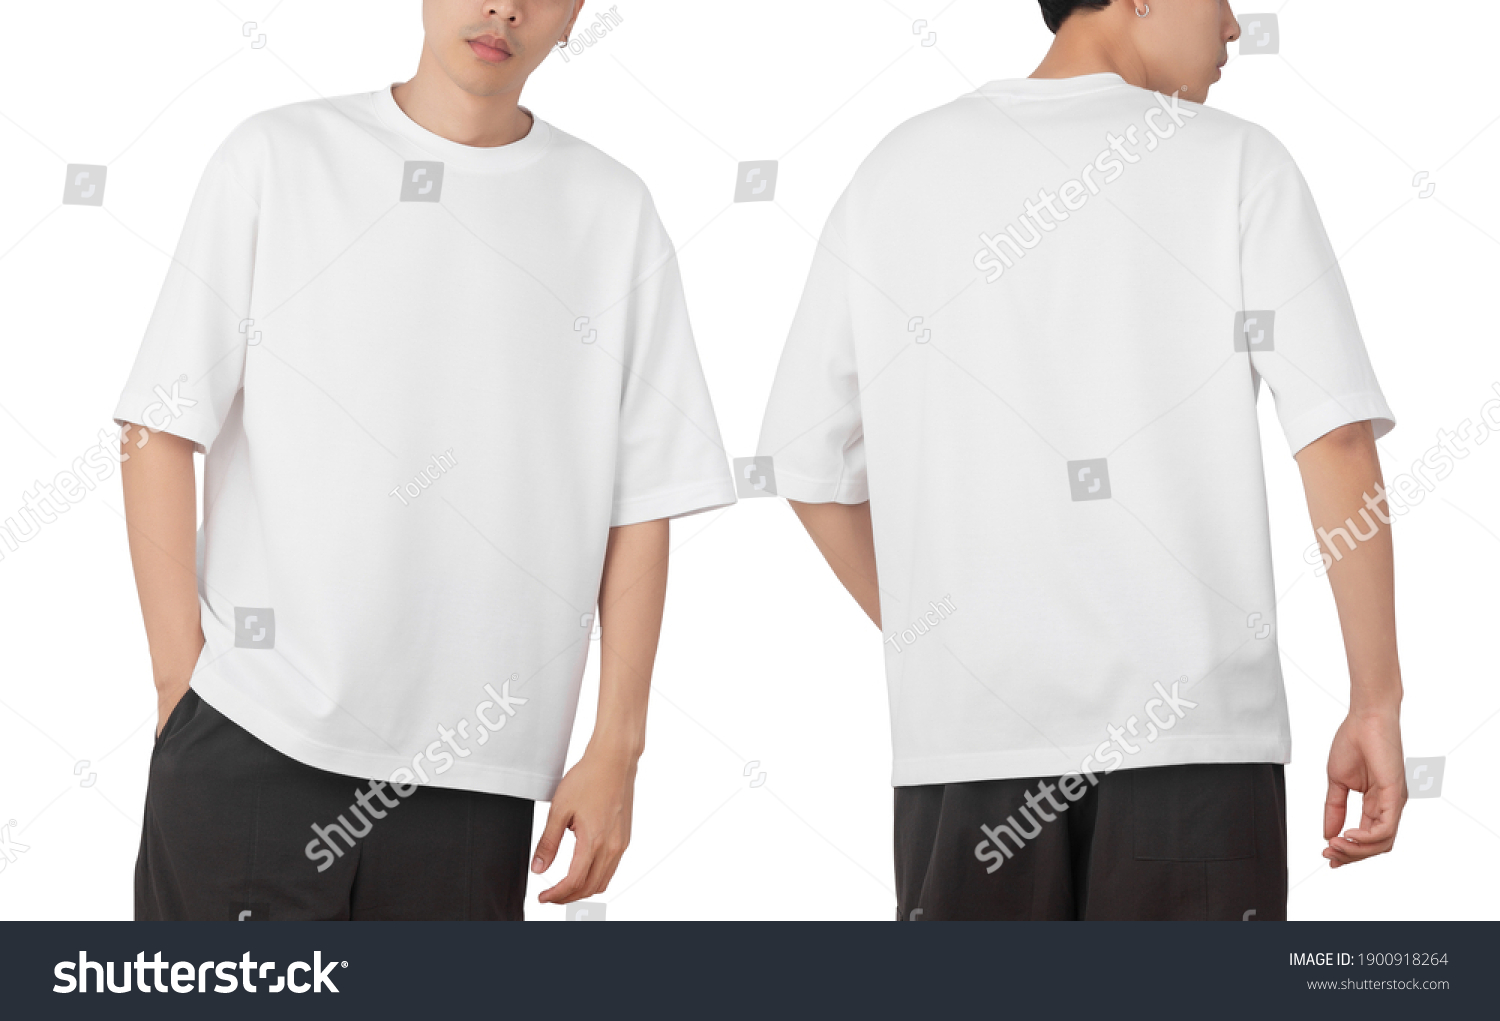 Print boy t shirts Images, Stock Photos & Vectors | Shutterstock